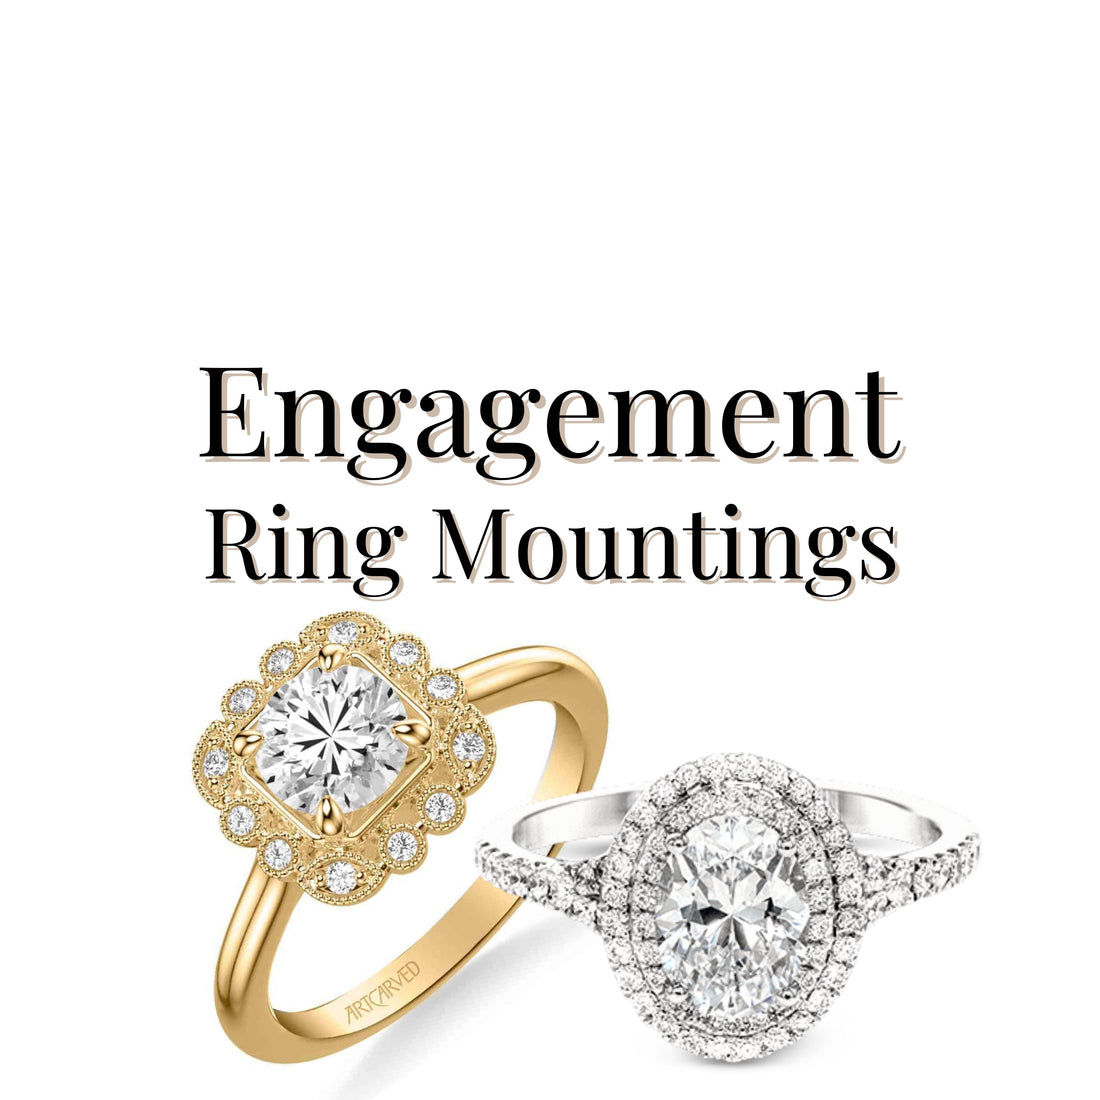  Engagement Ring Mountings - Diamond Designs